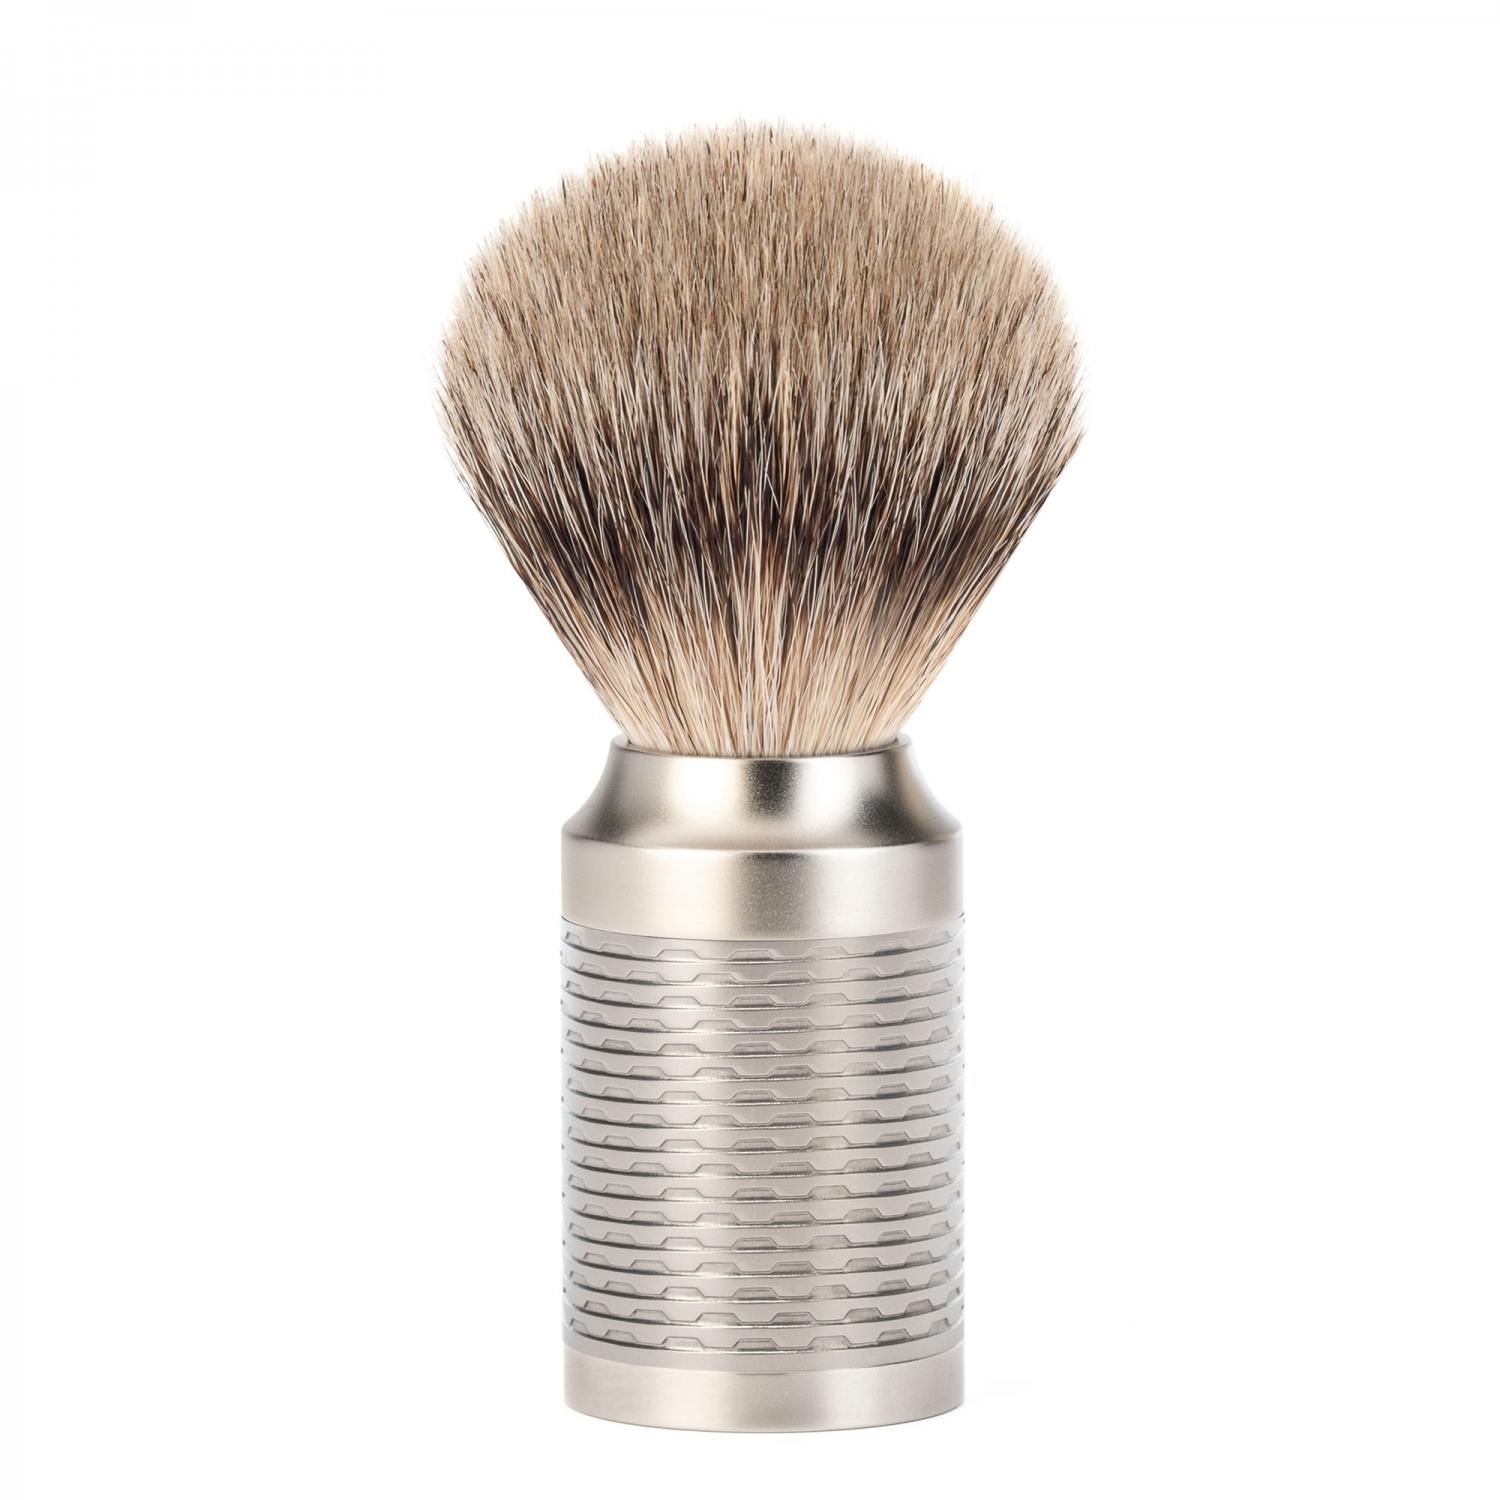 MÜHLE ROCCA Pure Matt Stainless Steel Silvertip Badger Shaving Brush